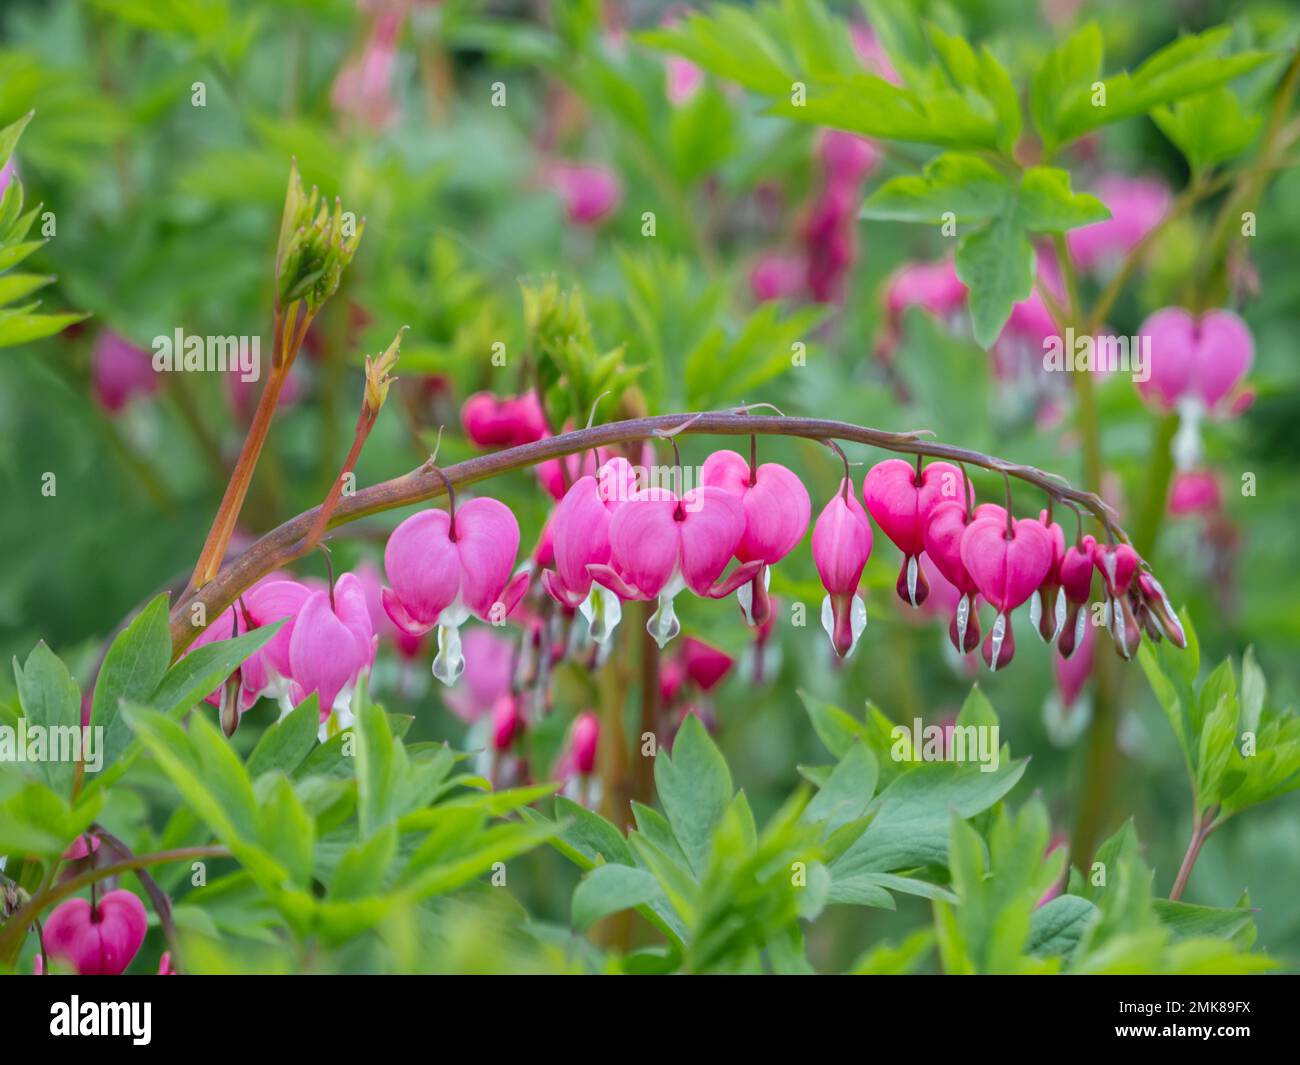 Flowering plant Lamprocapnos spectabilis, bleeding heart, fallopian buds or Asian bleeding-heart. Bright pink flowers in bloom. Summer natural backgro Stock Photo